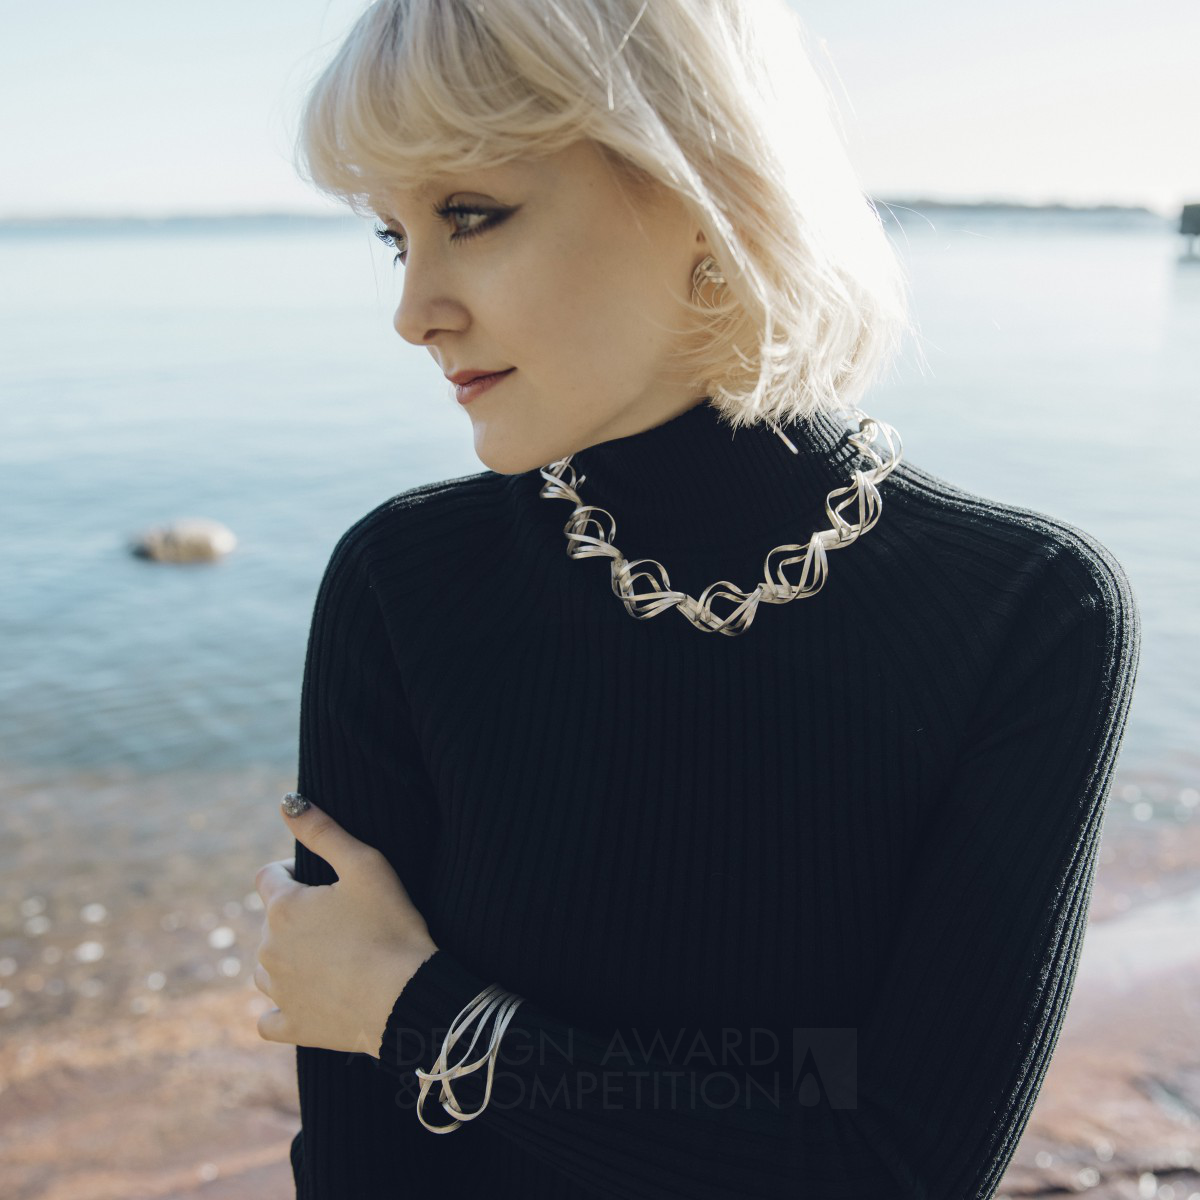 Anna-Reetta Väänänen wins Bronze at the prestigious A' Jewelry Design Award with Marilyn Jewelry.